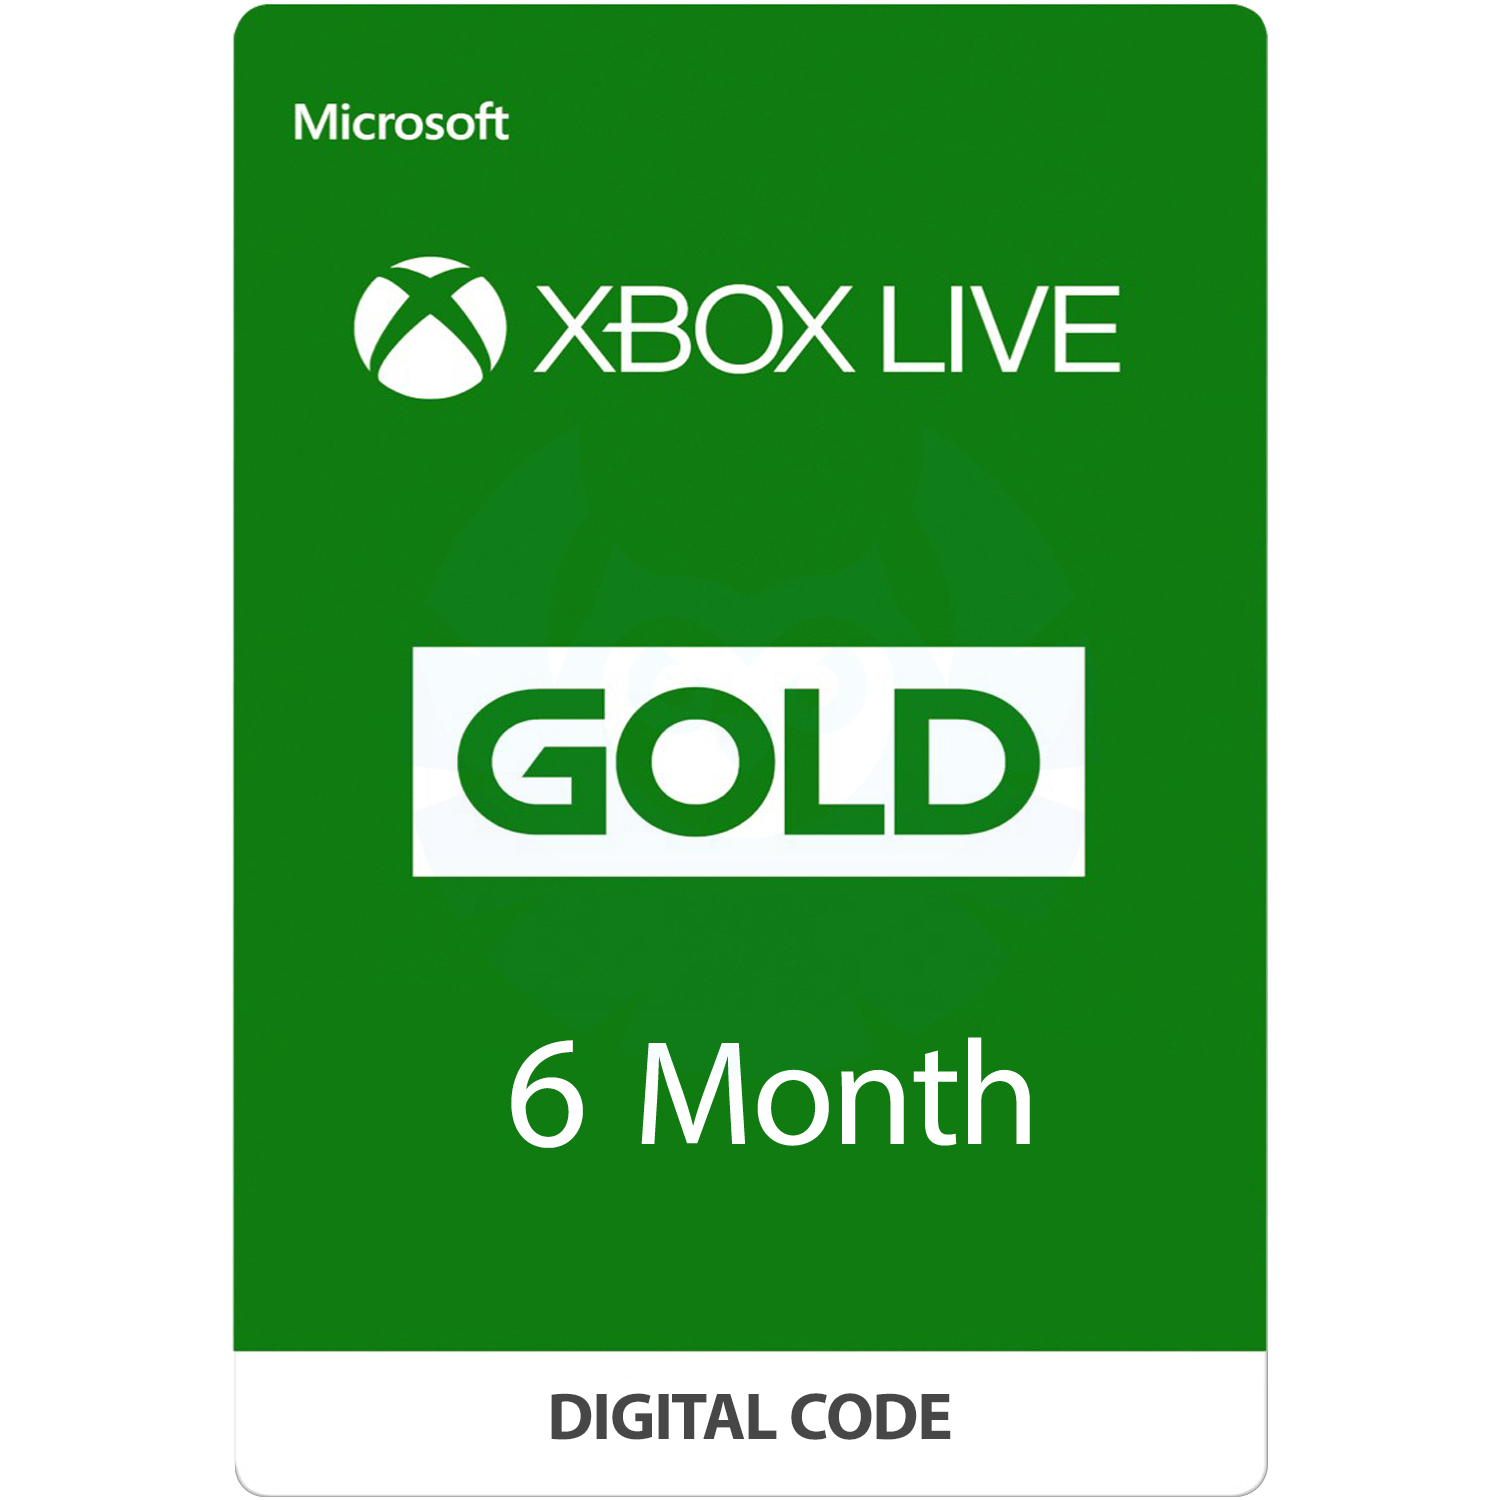 Perseus Specificitet Studiet Buy Xbox Live Gold 6 Months Xbox Live Key Europe | TURGAME